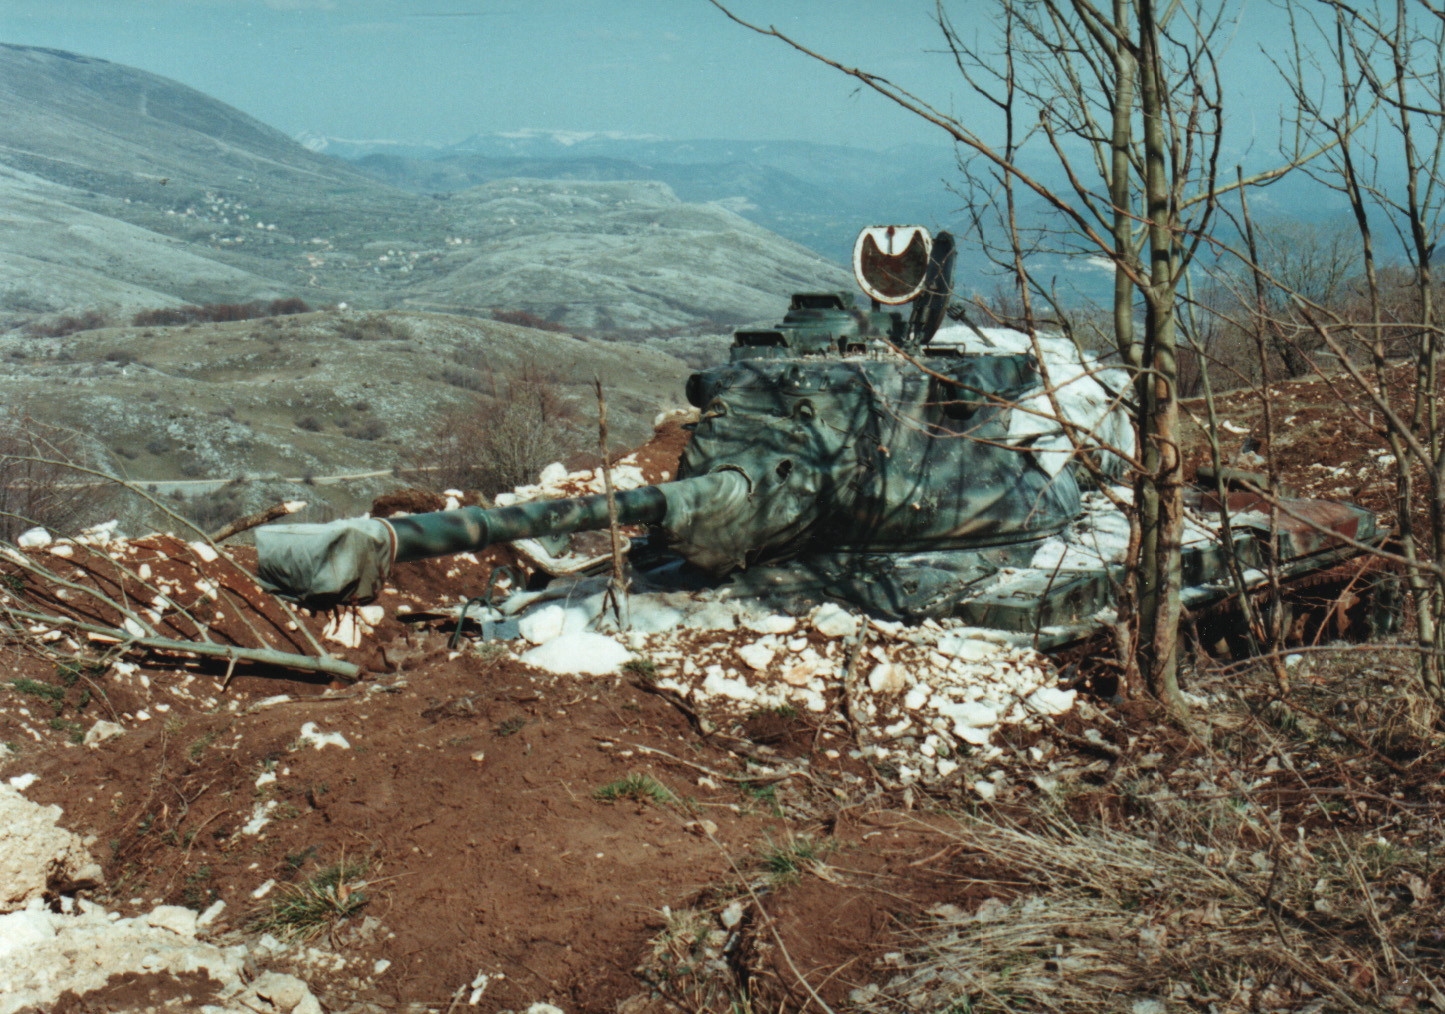 Rat u bosni slikama 1992 1995.